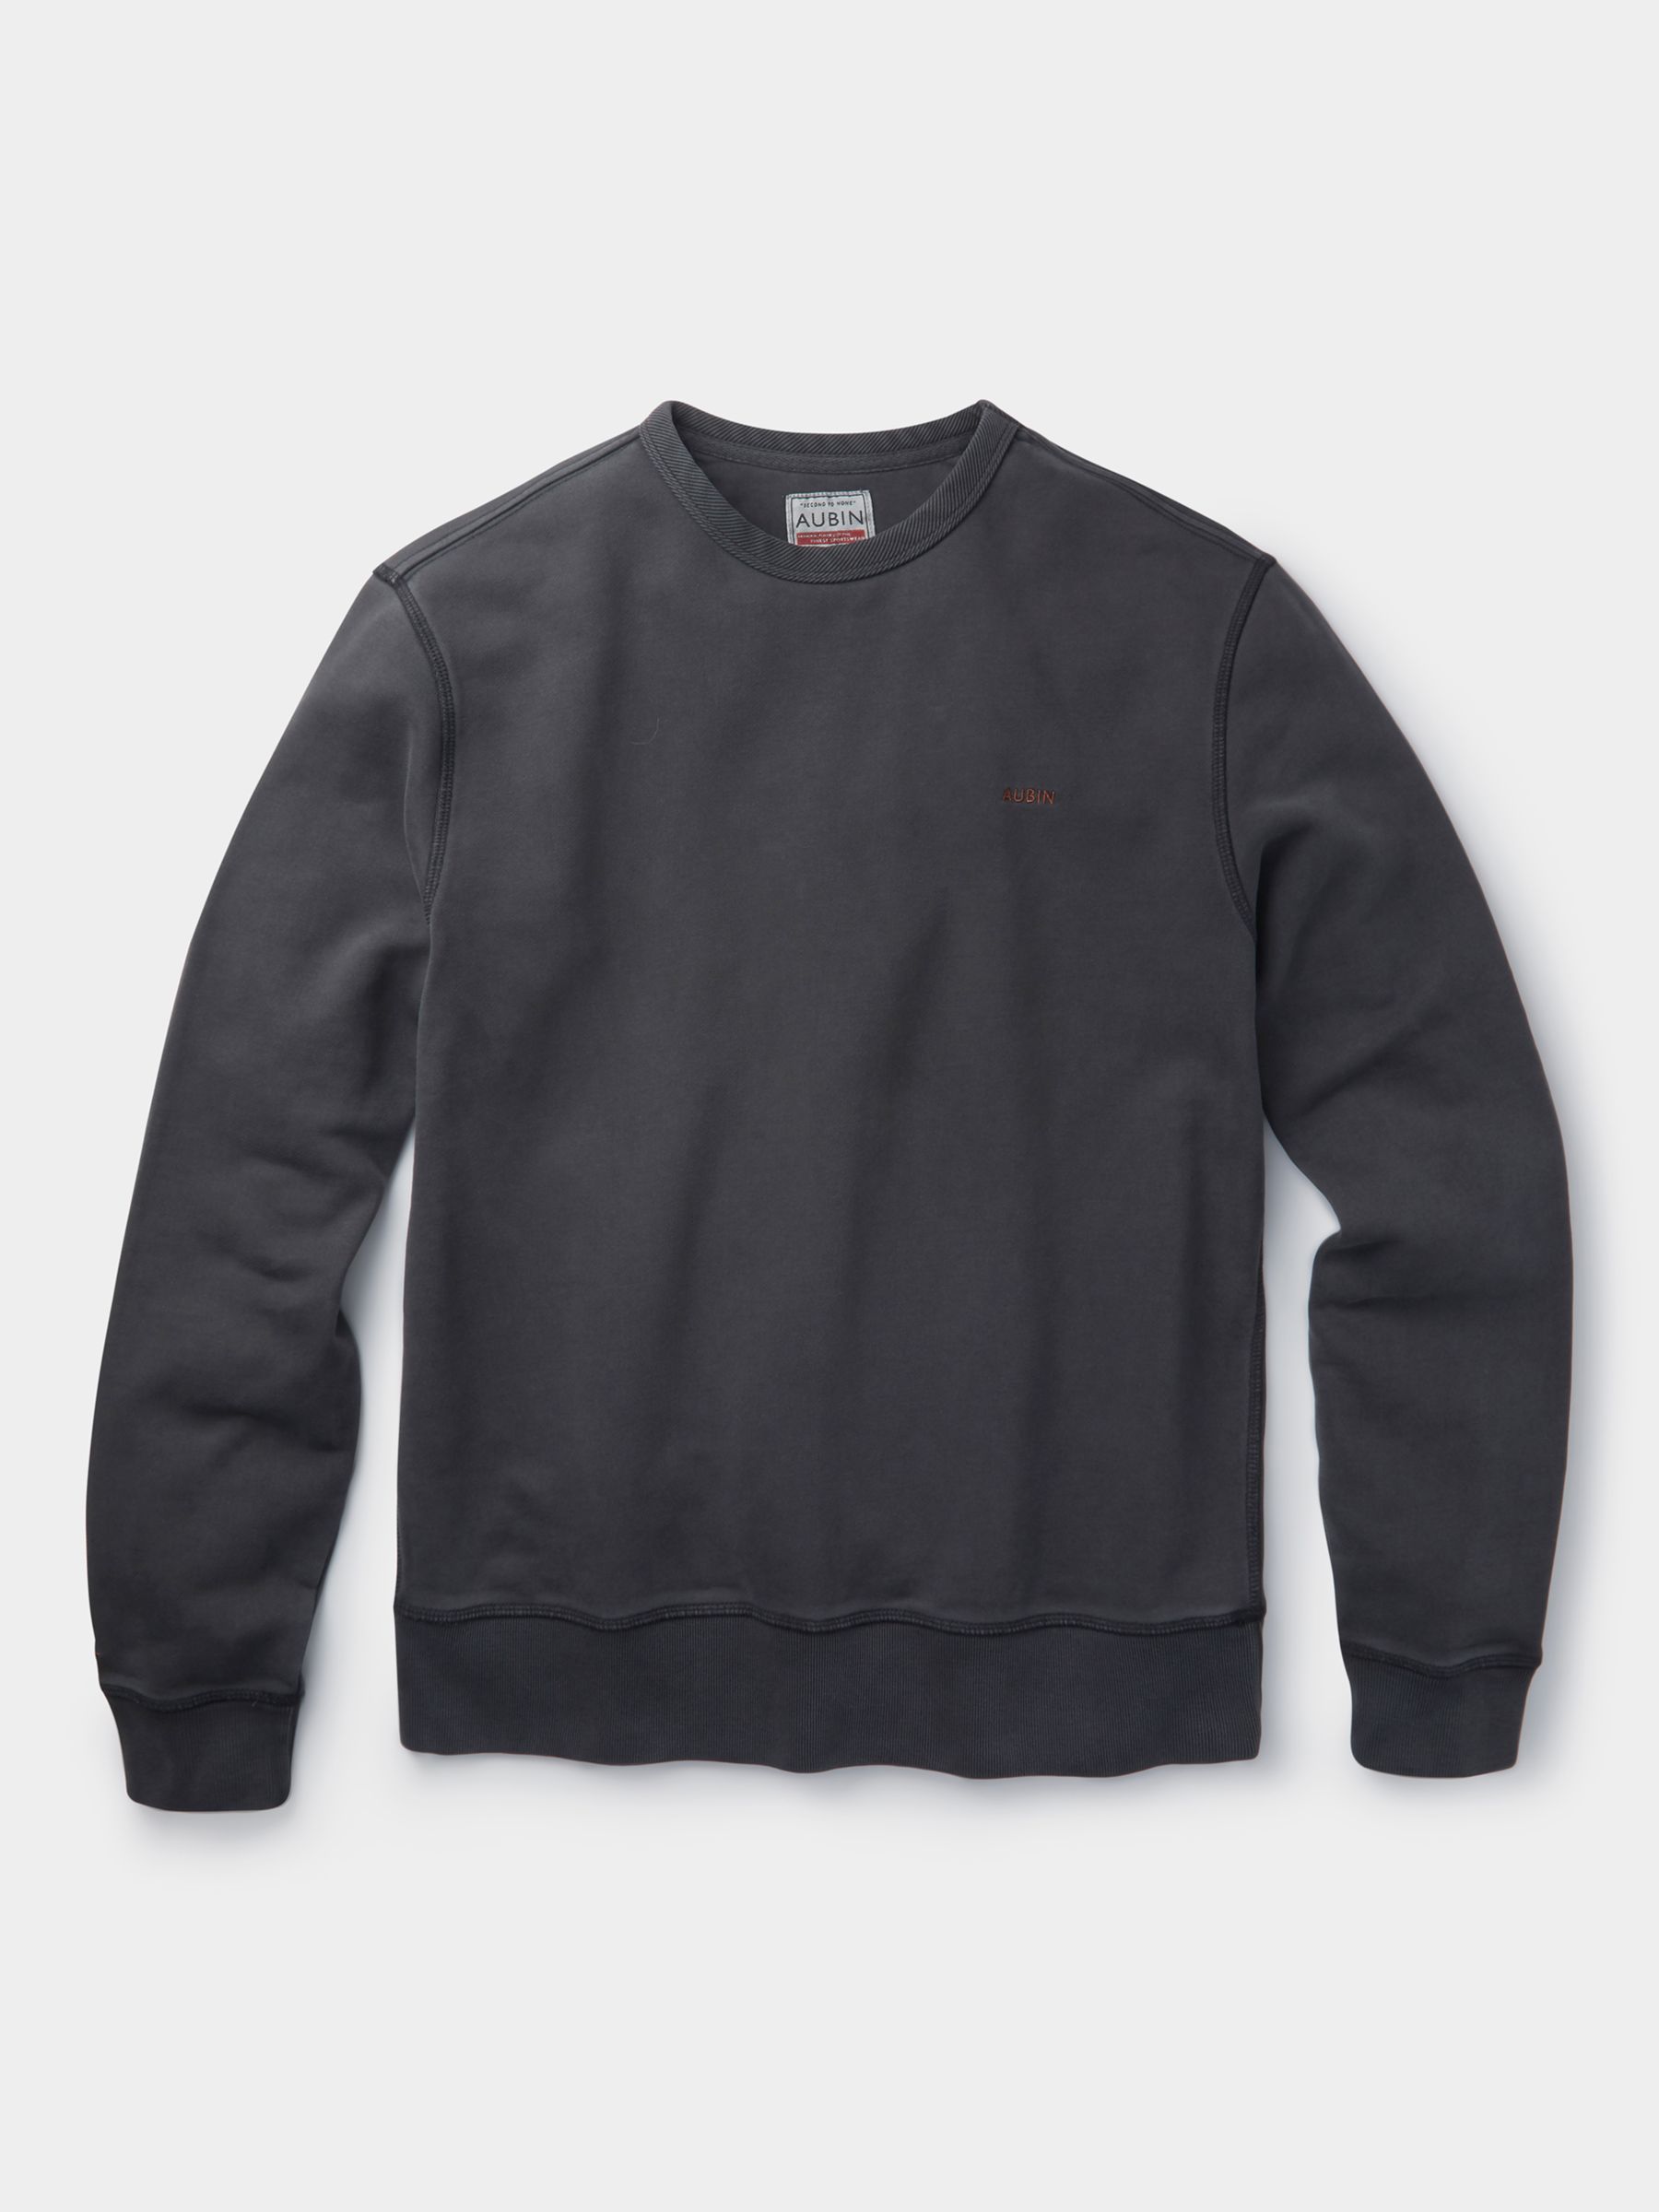 Aubin Vestry Crew Neck Cotton Sweatshirt, Black, S